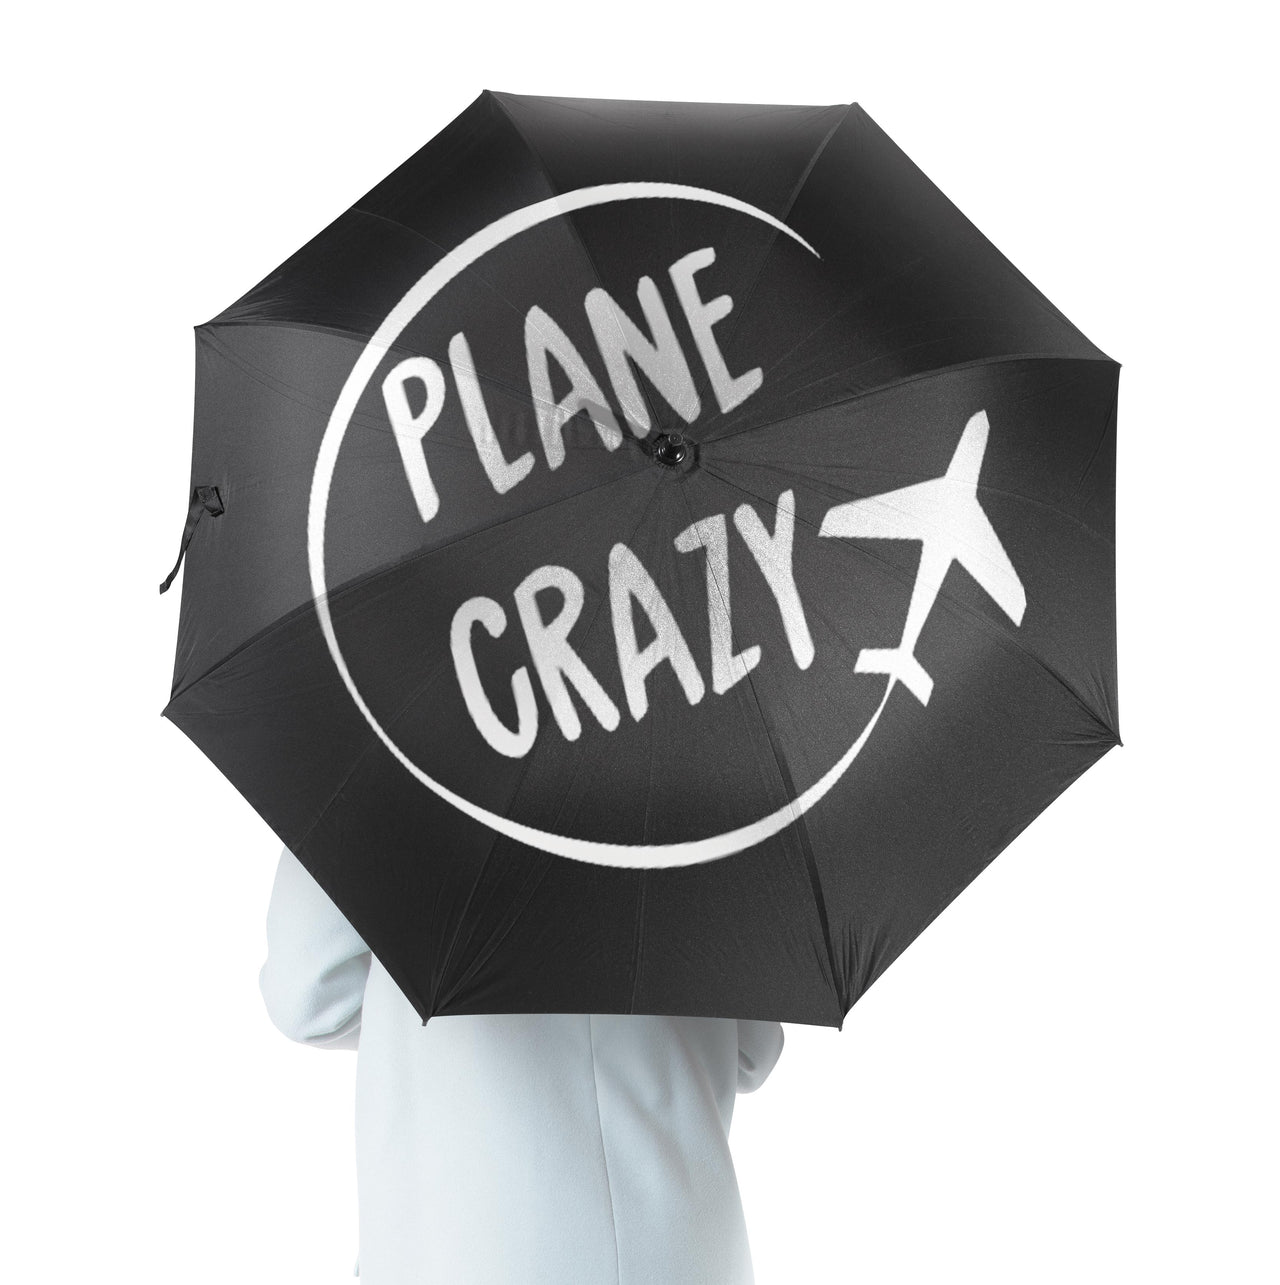 Plane Crazy Designed Umbrella